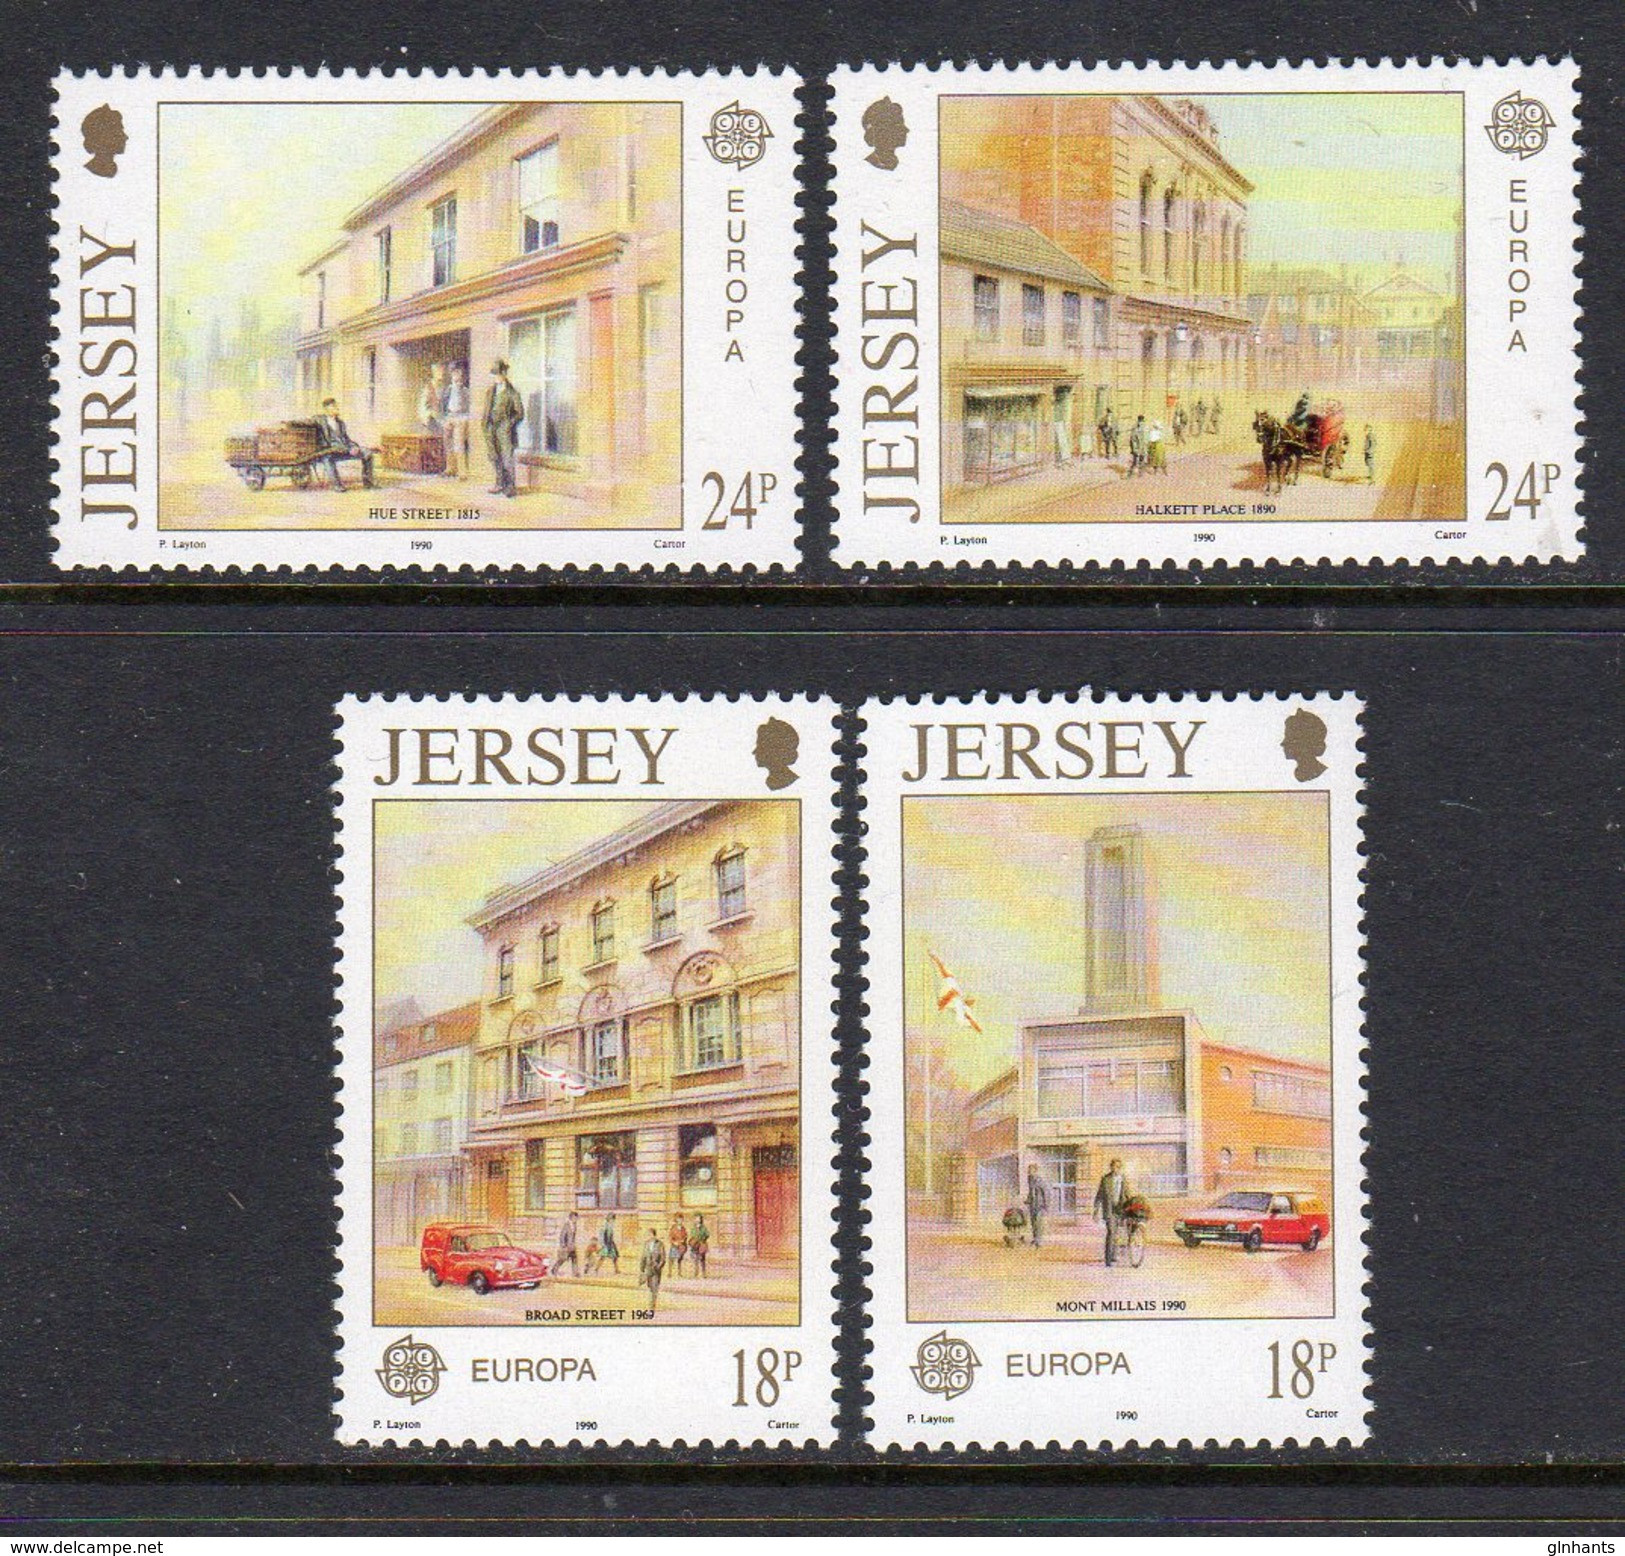 GB JERSEY - 1990 EUROPA POST OFFICE BUILDINGS SET (4V) SG 517-520 FINE MNH ** - 1990